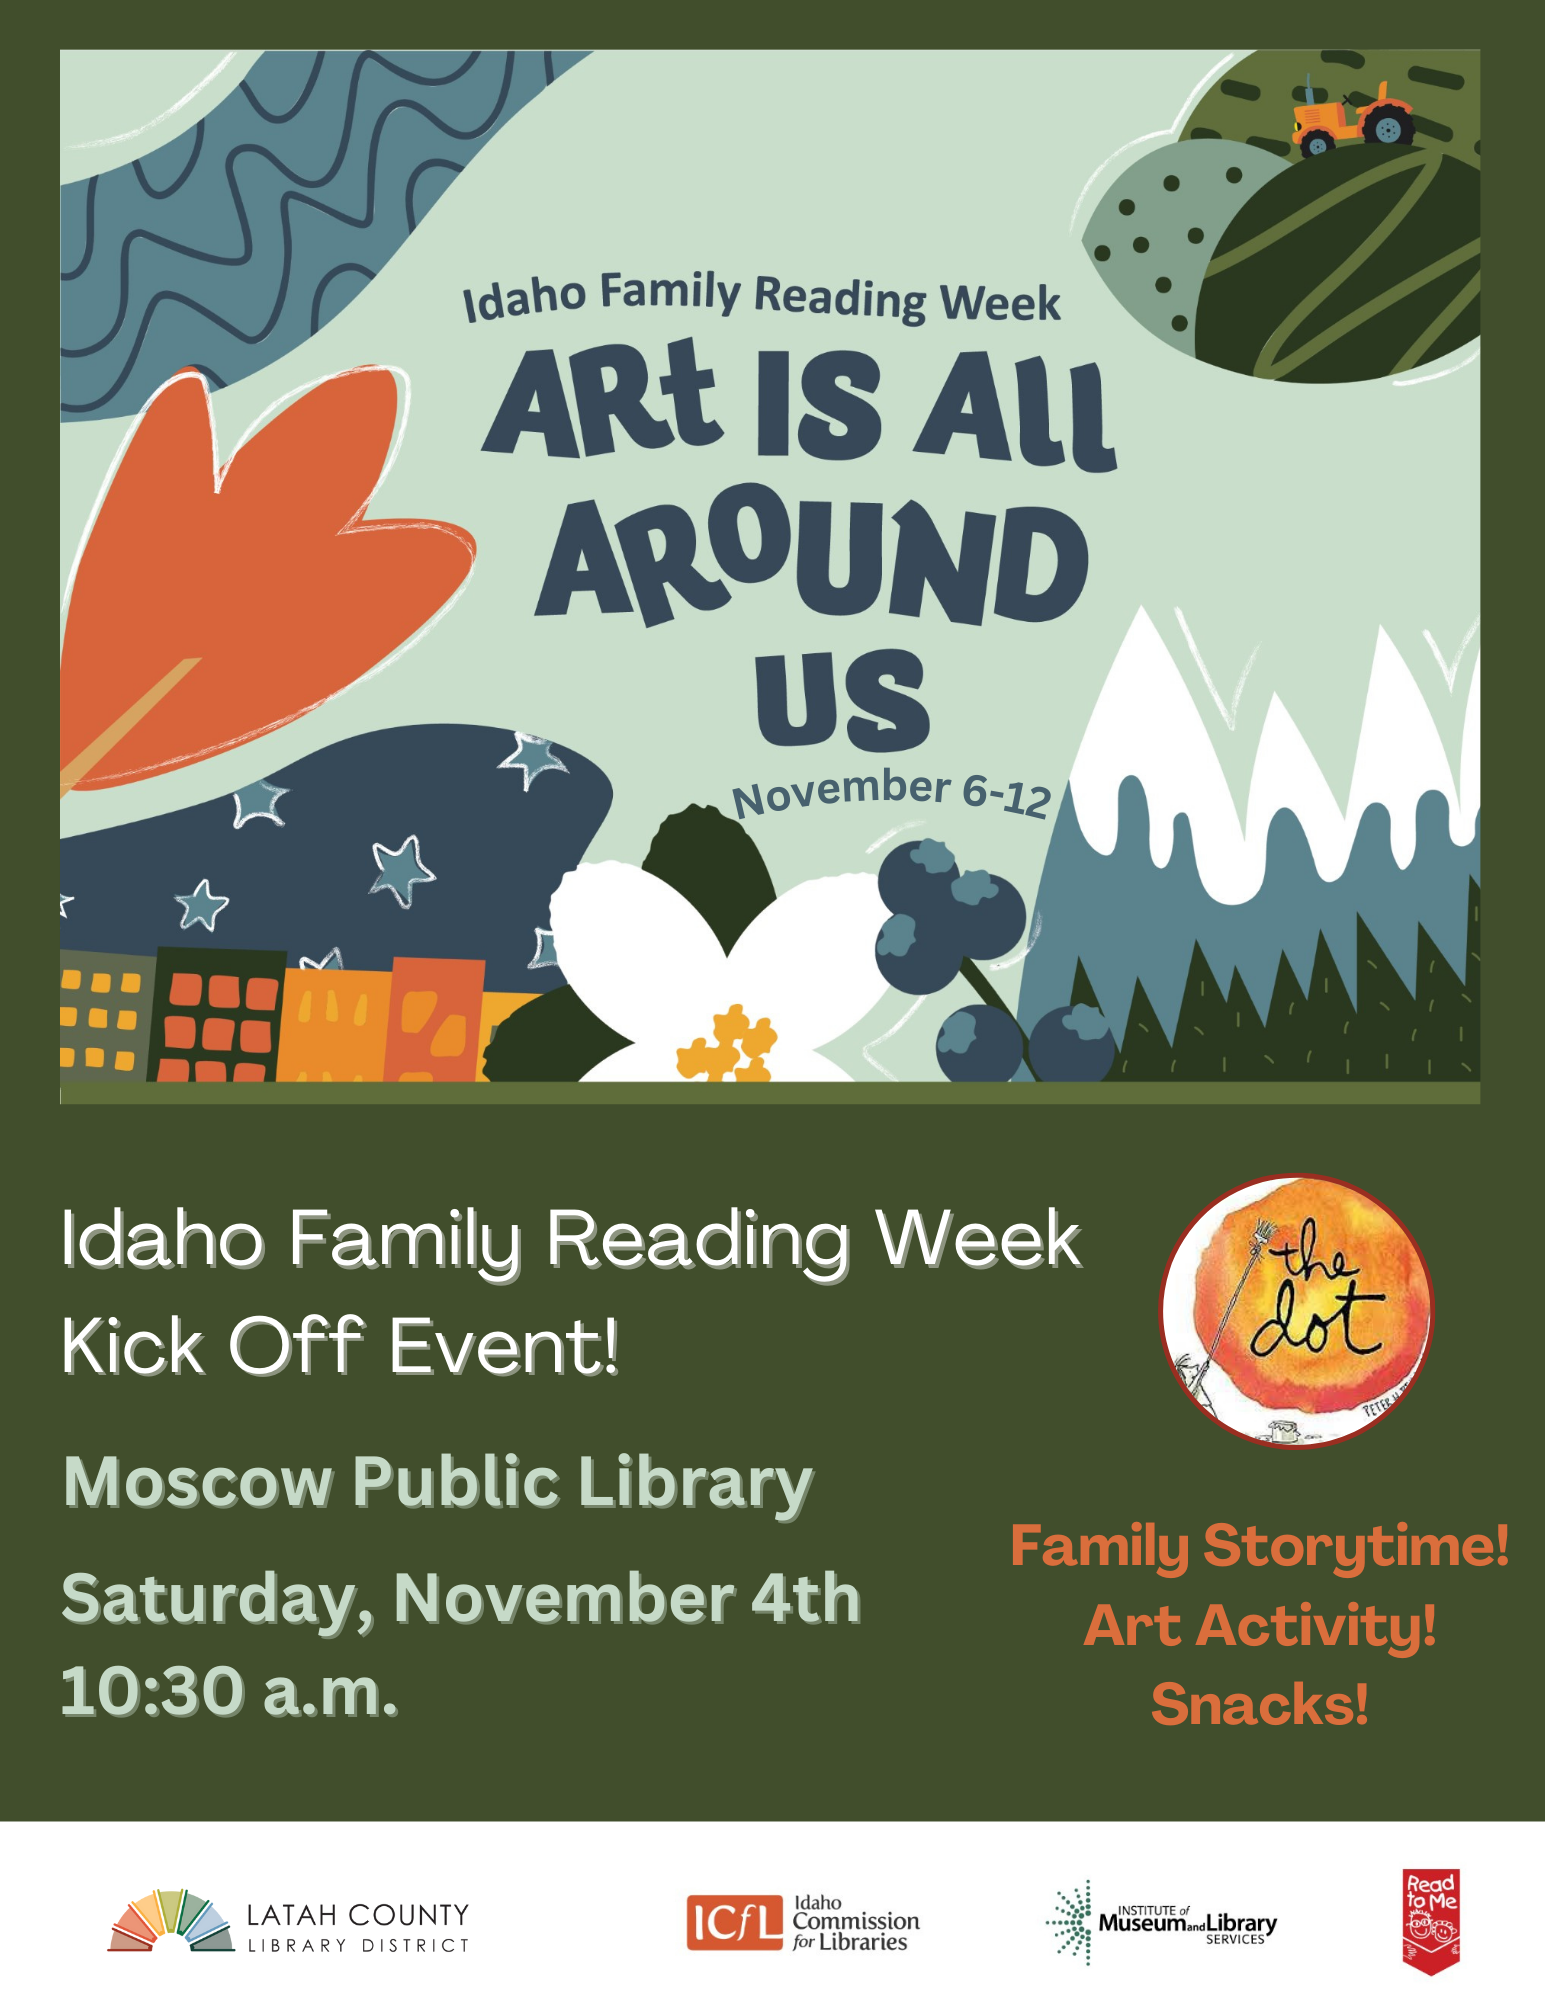 Idaho Family Reading Week at the Moscow Public Library